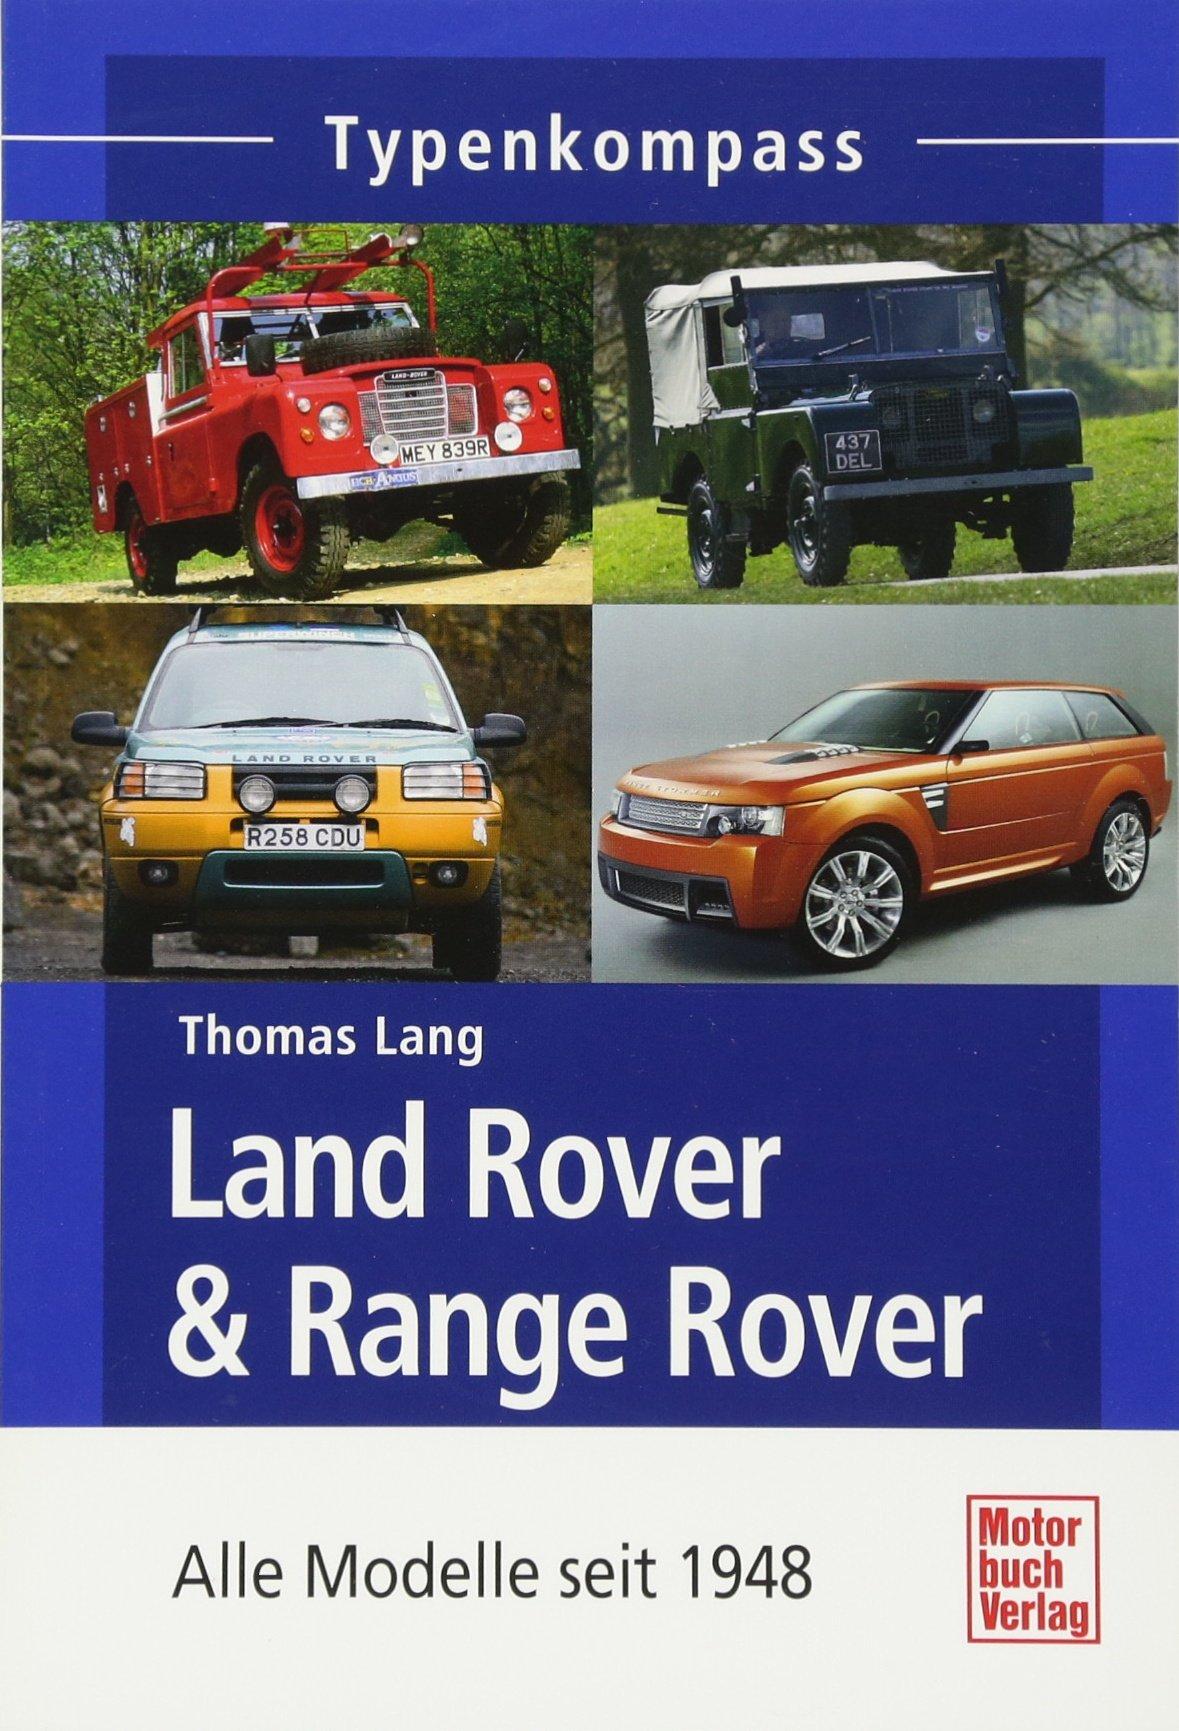 Land Rover & Range Rover Sport